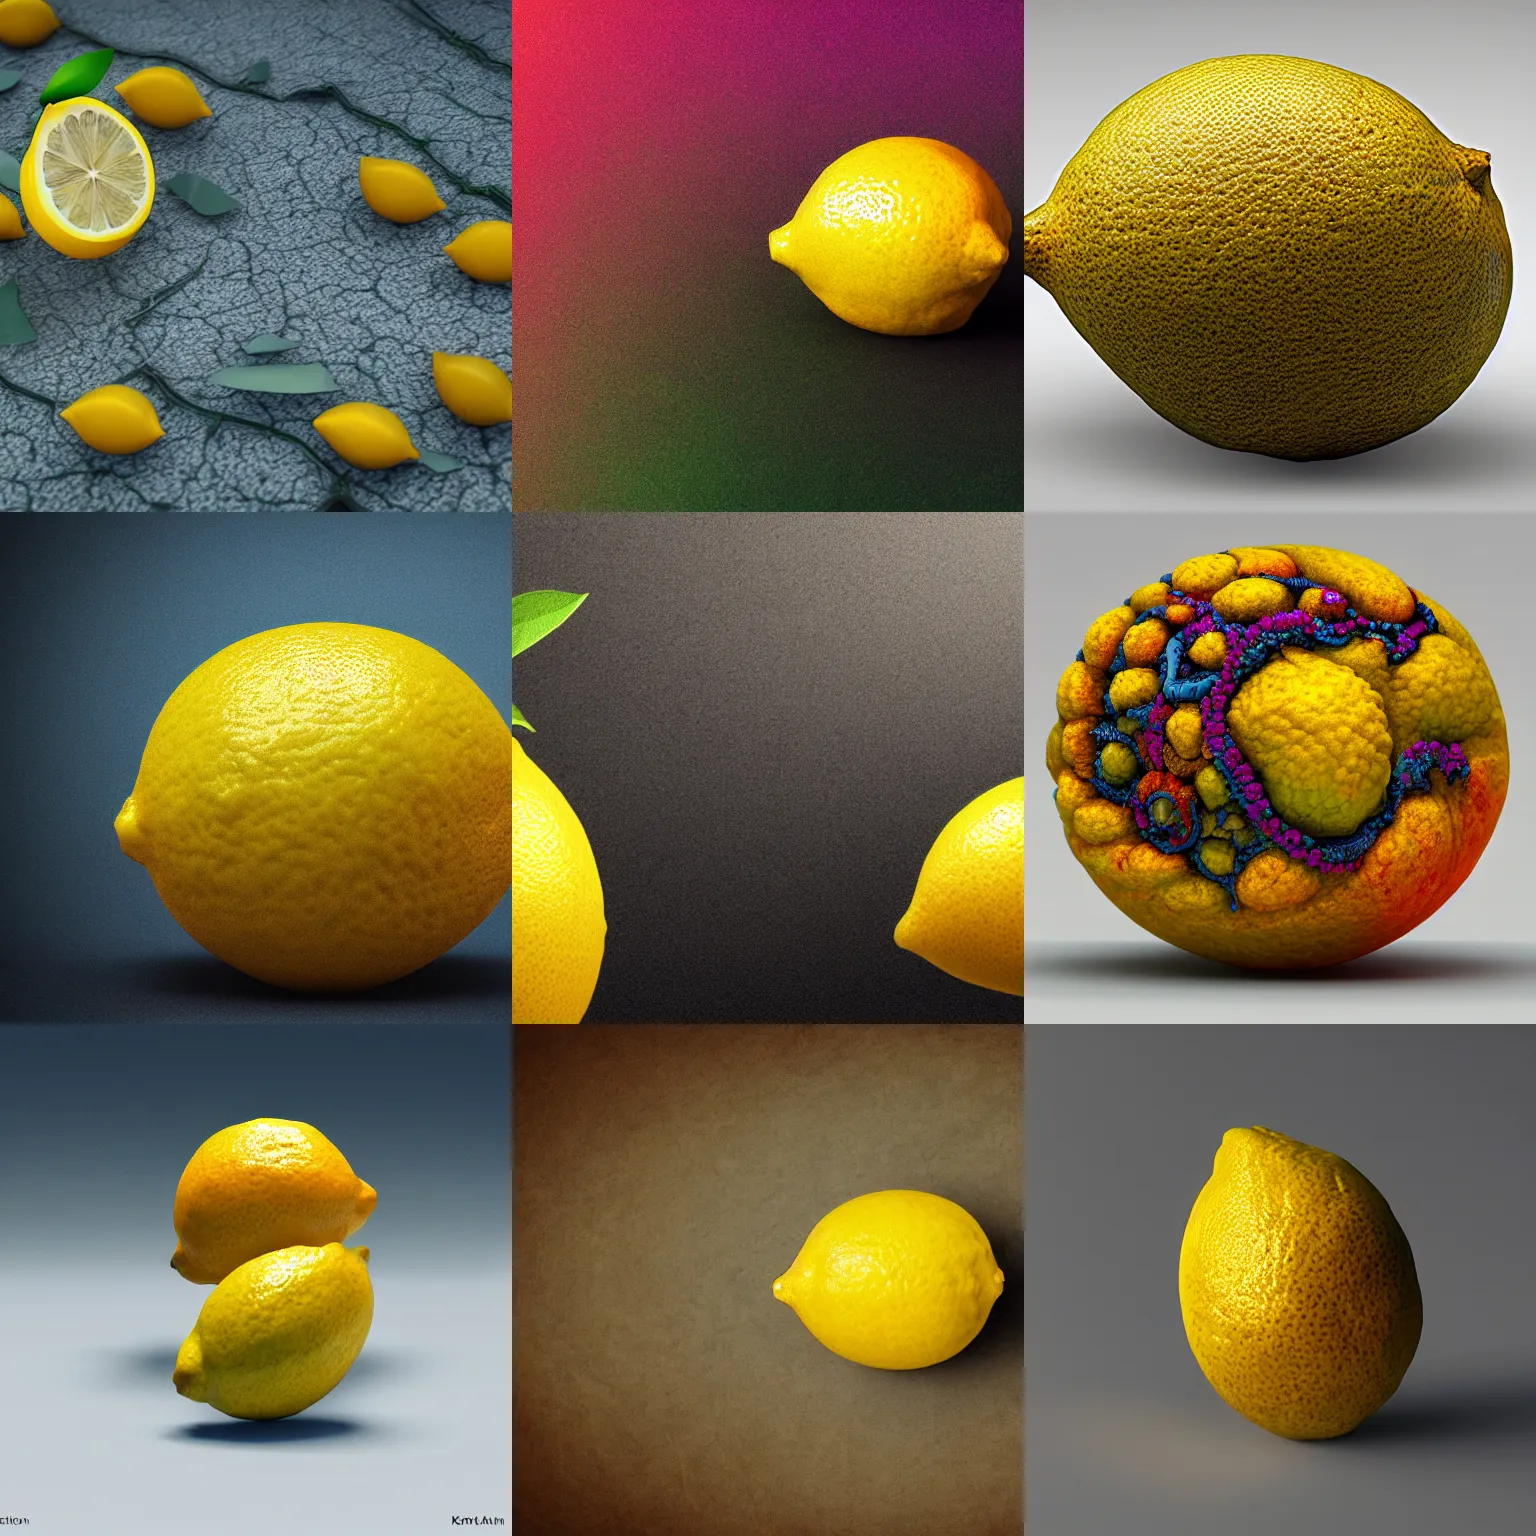 Prompt: a large mouldy lemon, deviantart, trending on artstation, colorful, intricate, by kathleen ryan, photorealistic, unreal 5 engine, dlsr, bokeh